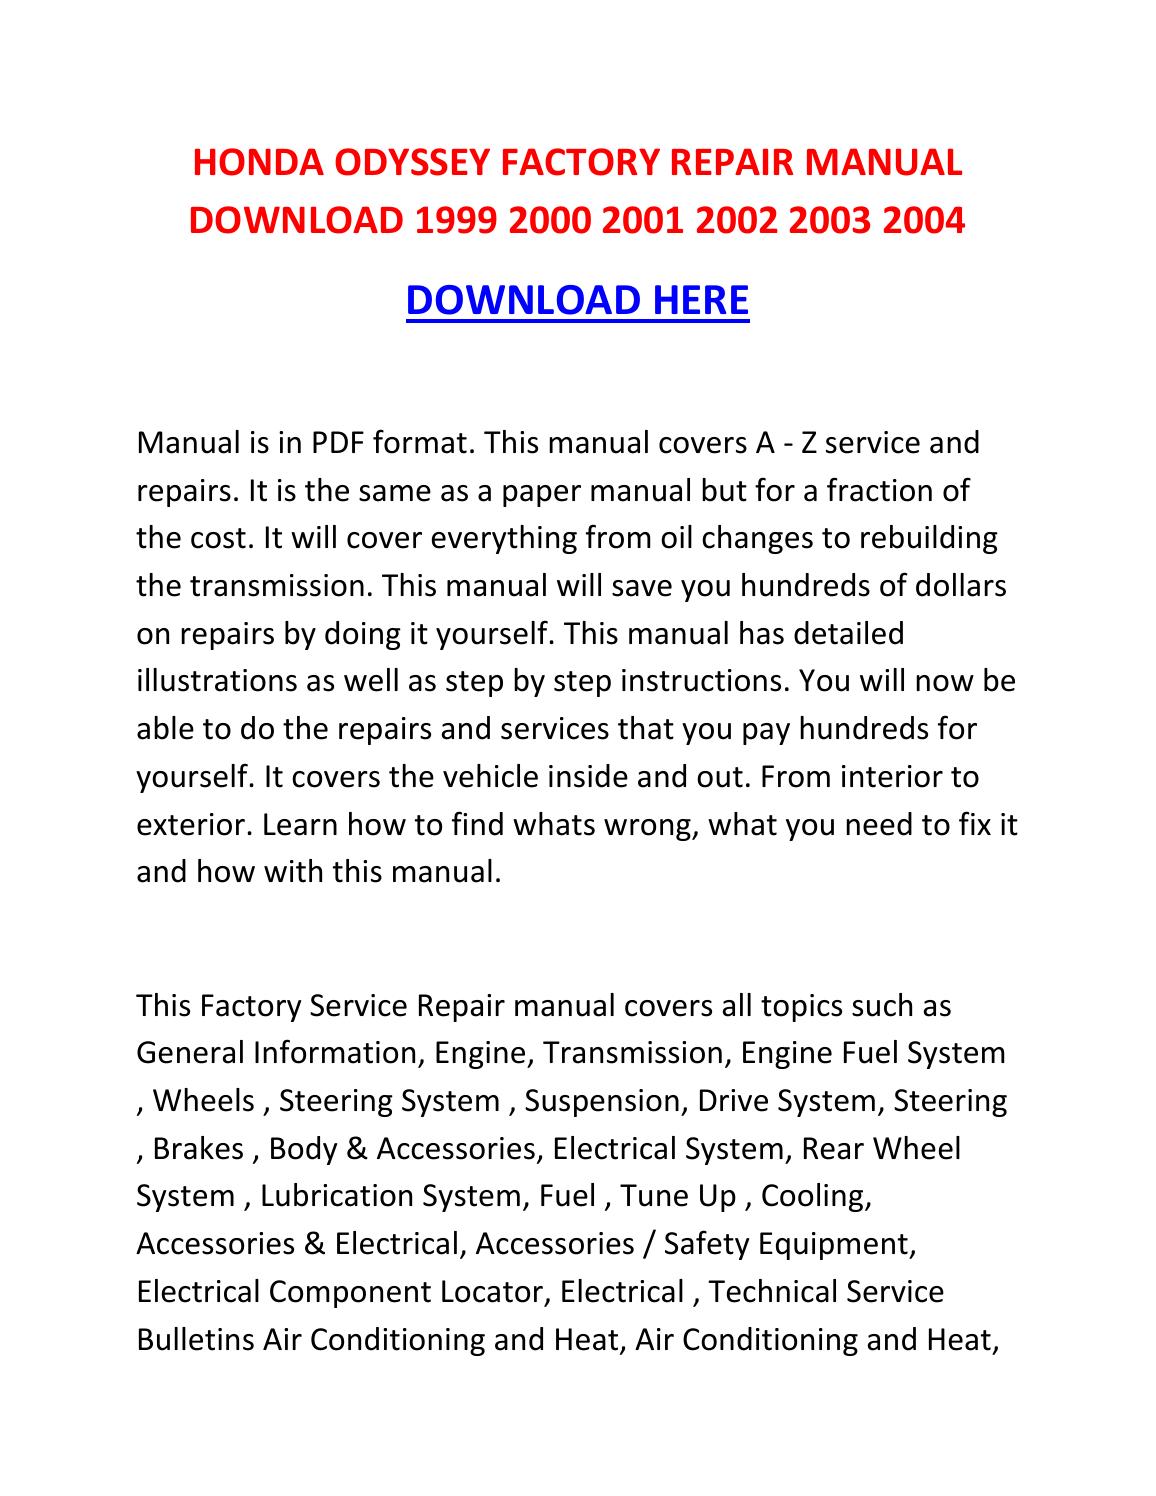 Honda odyssey service manual pdf